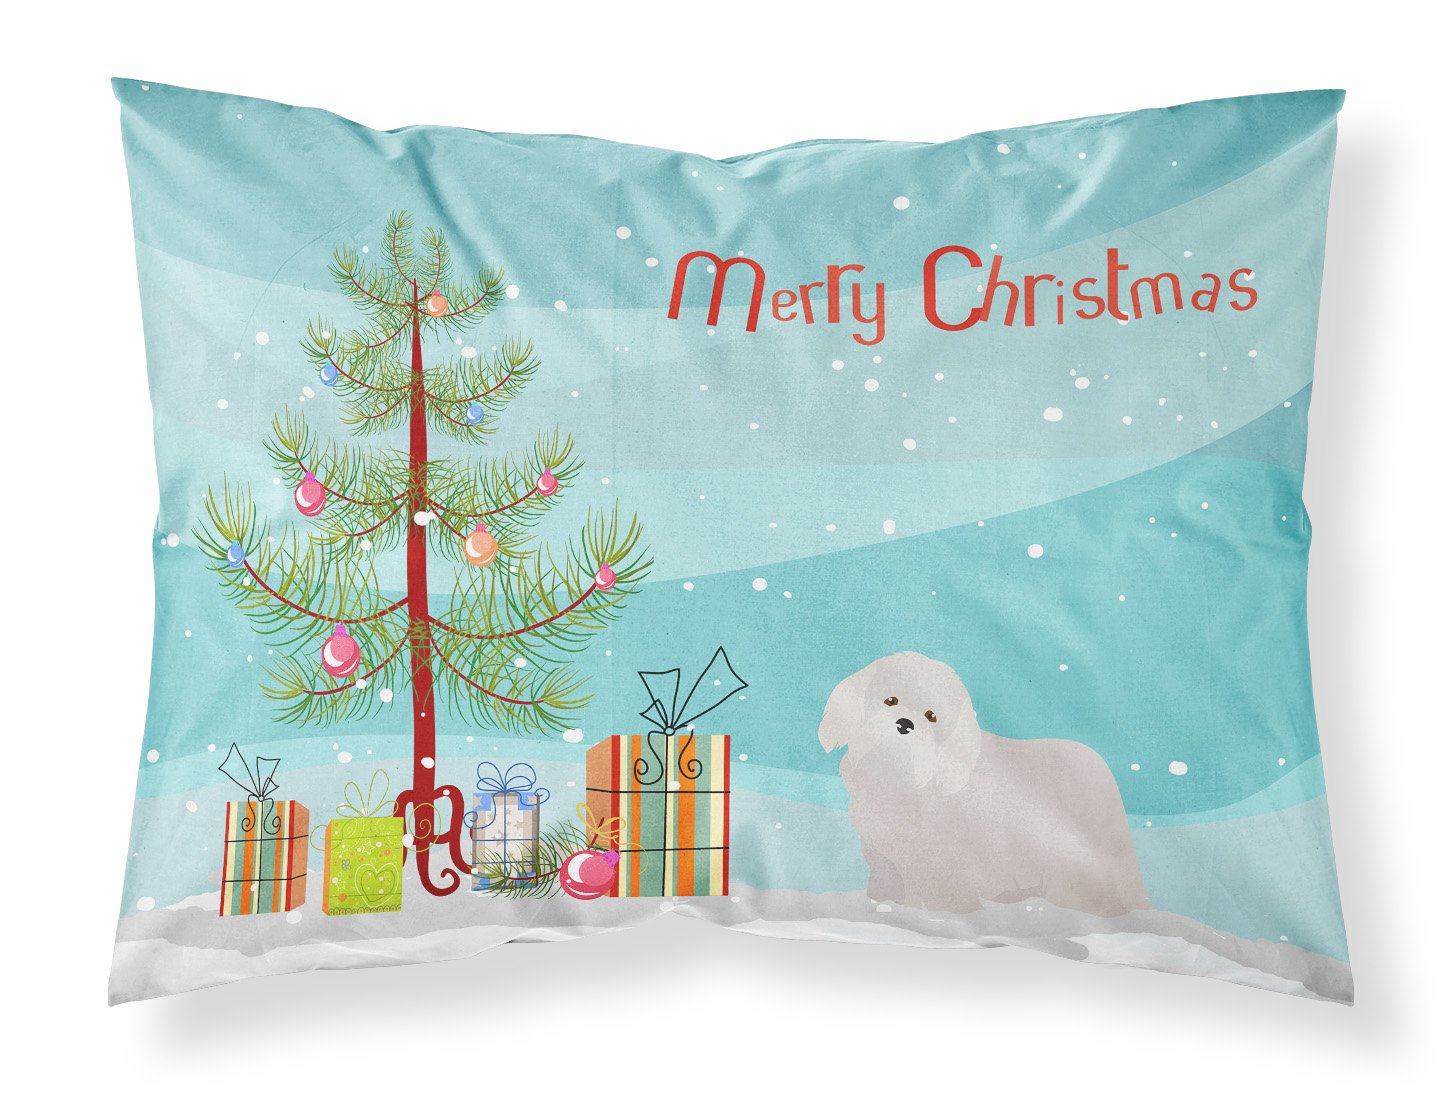 Coton de Tulear Christmas Tree Fabric Standard Pillowcase CK3448PILLOWCASE by Caroline's Treasures